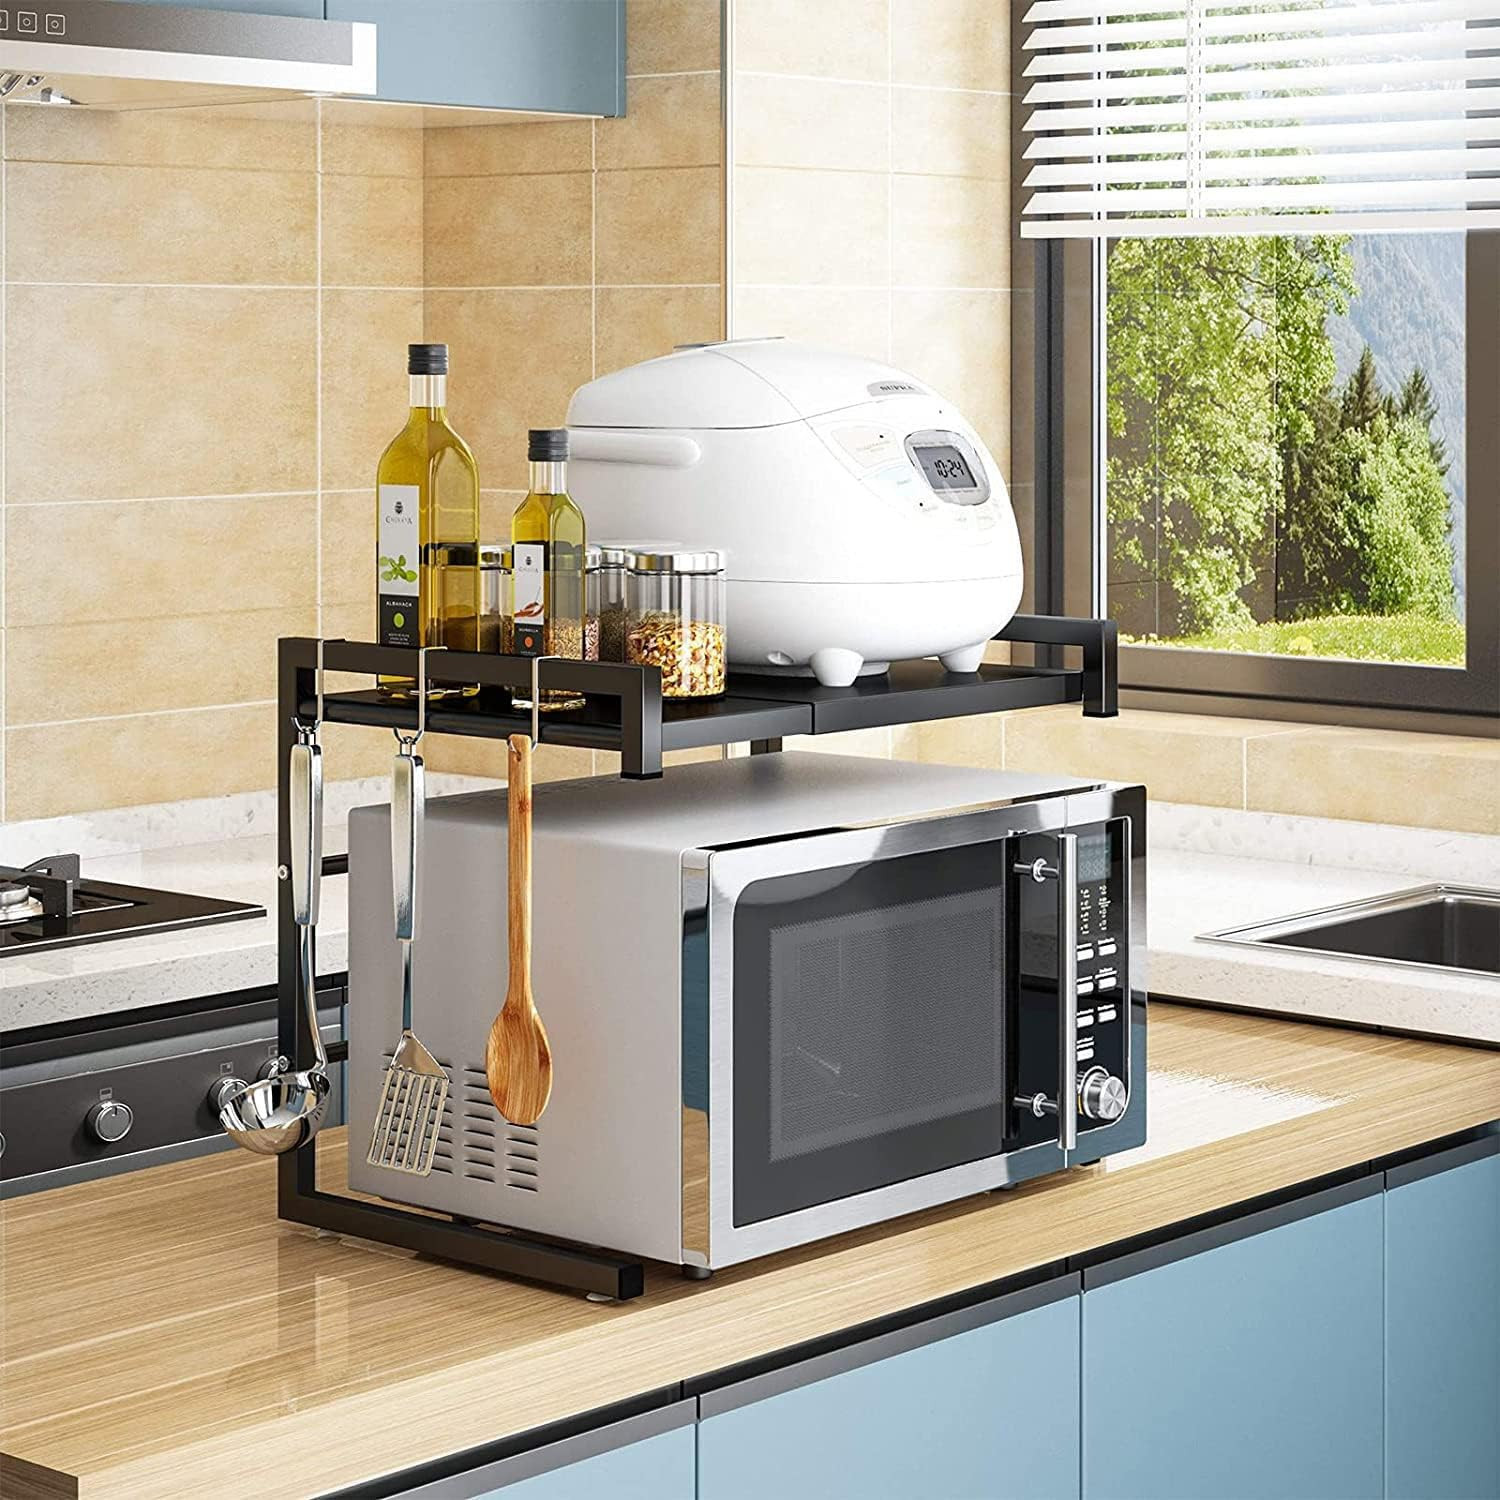 Kuber Industries Microwave Oven Rack|Telescopic Storage Rack|Microwave Shelf Stand With Hanging Hooks|Kitchen Counter Shelf Organizer (Black)